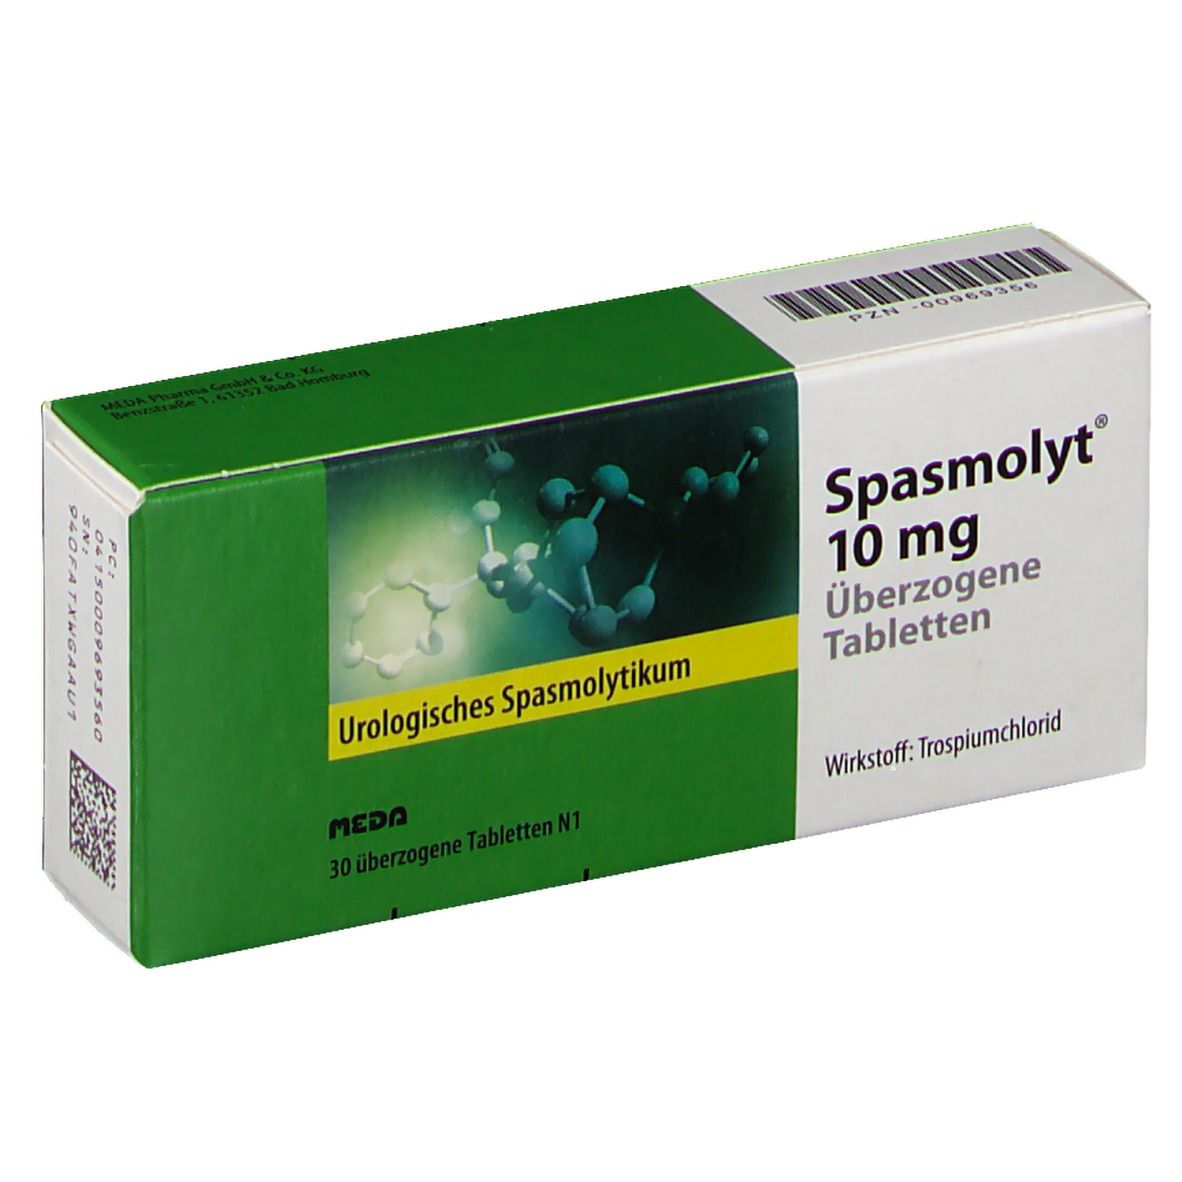 Spasmolyt® 10 mg